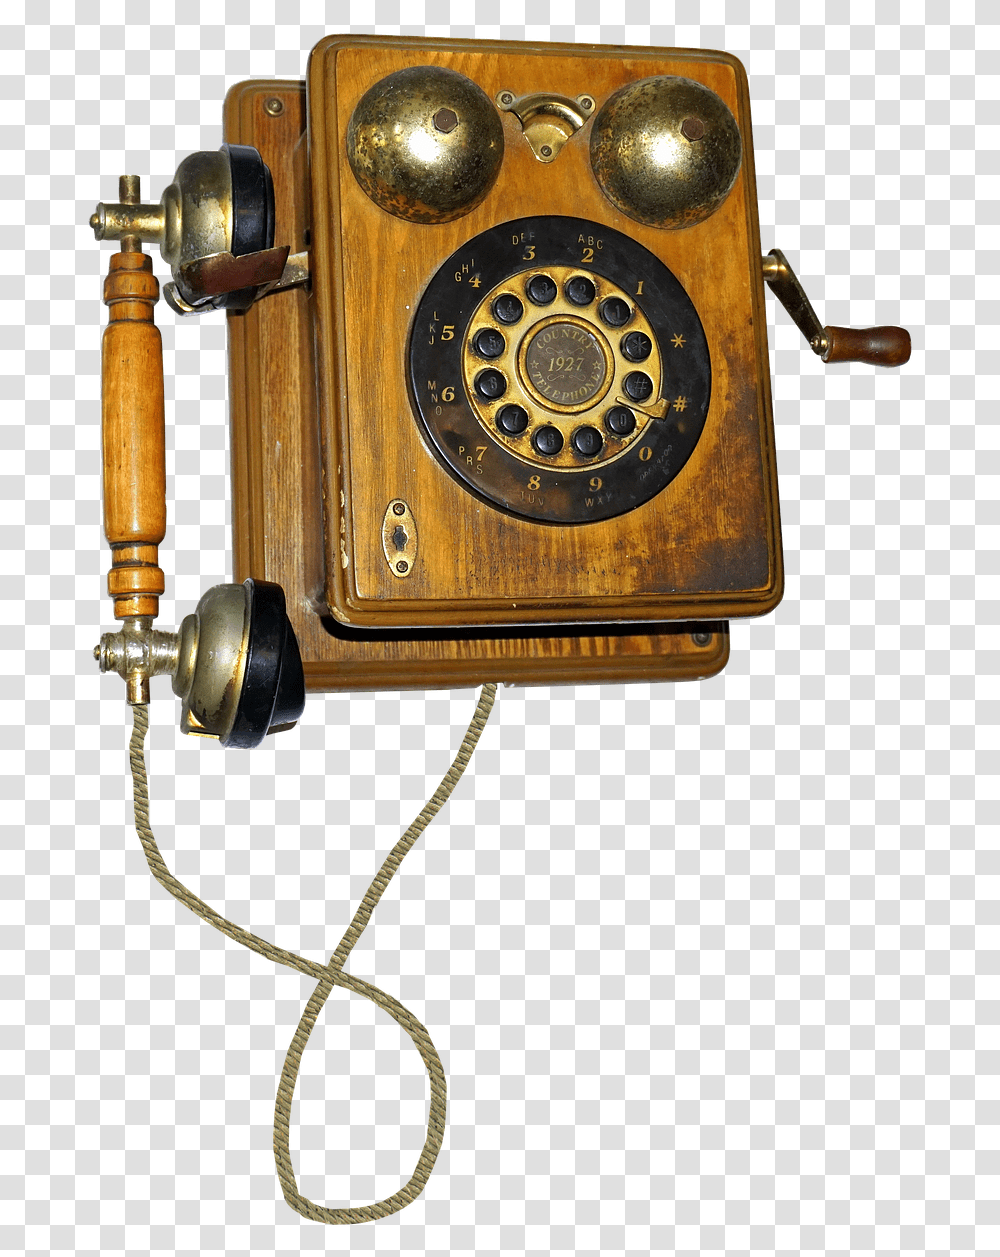 Включи звук старый телефон. Старинный телефон. Антикварный телефонный аппарат. Телефонный аппарат древний. Старый аппарат телефон.